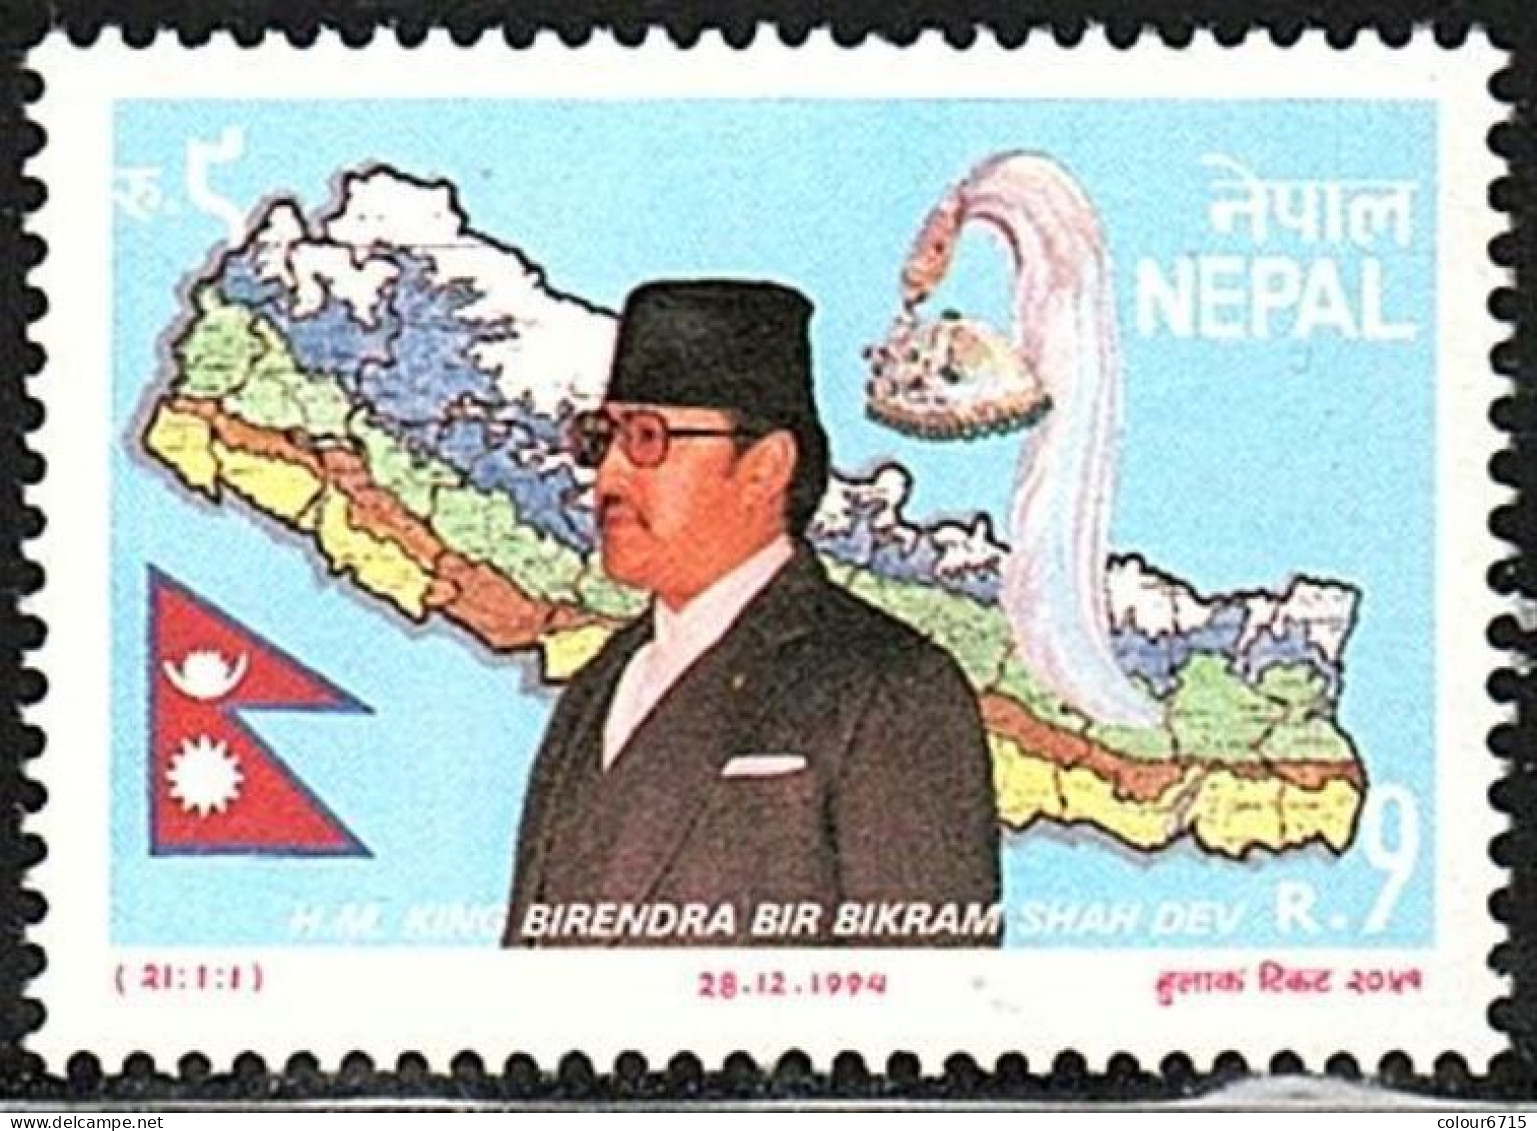 Nepal 1994 The 49th Anniversary Of The Birth Of King Birendra Stamp 1v MNH - Nepal